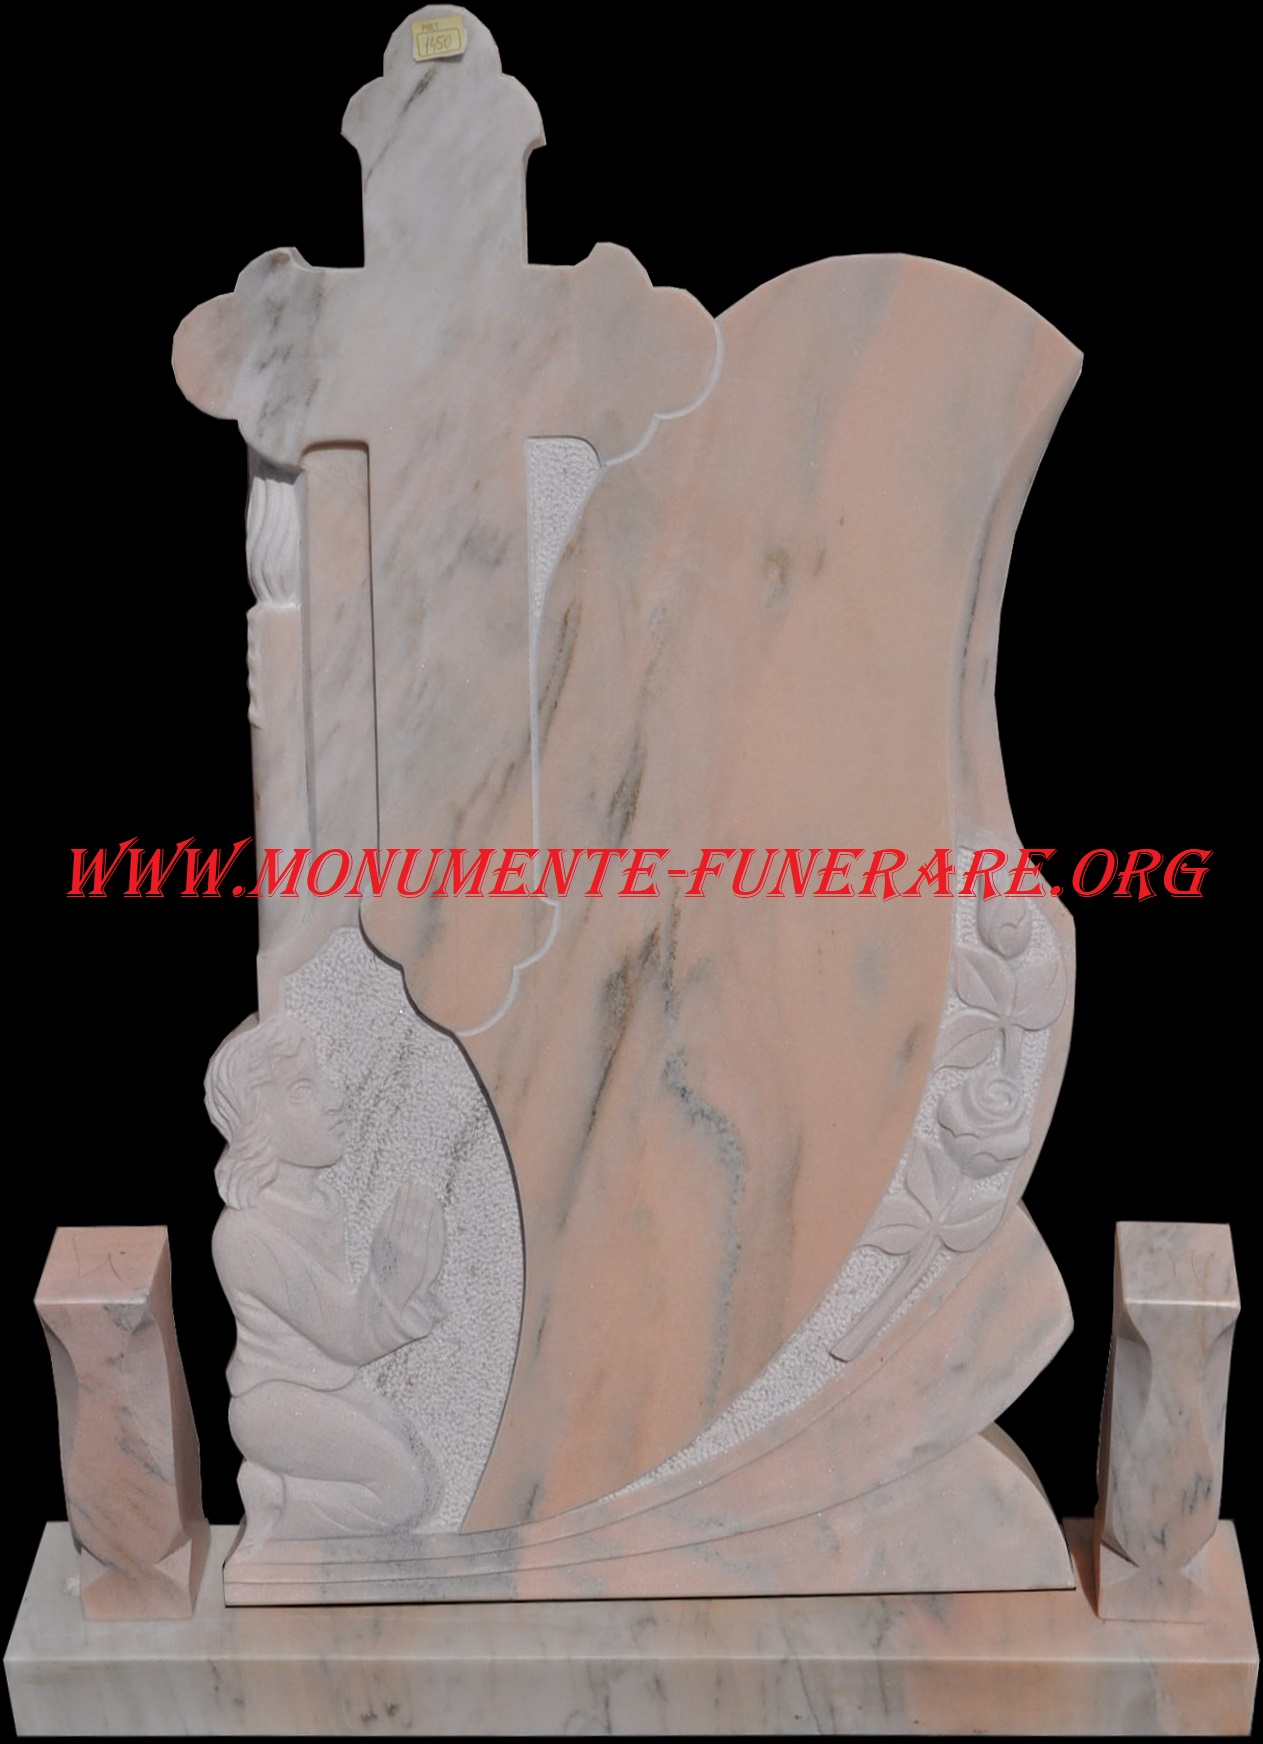 Monument Funerar Model stylaz-6